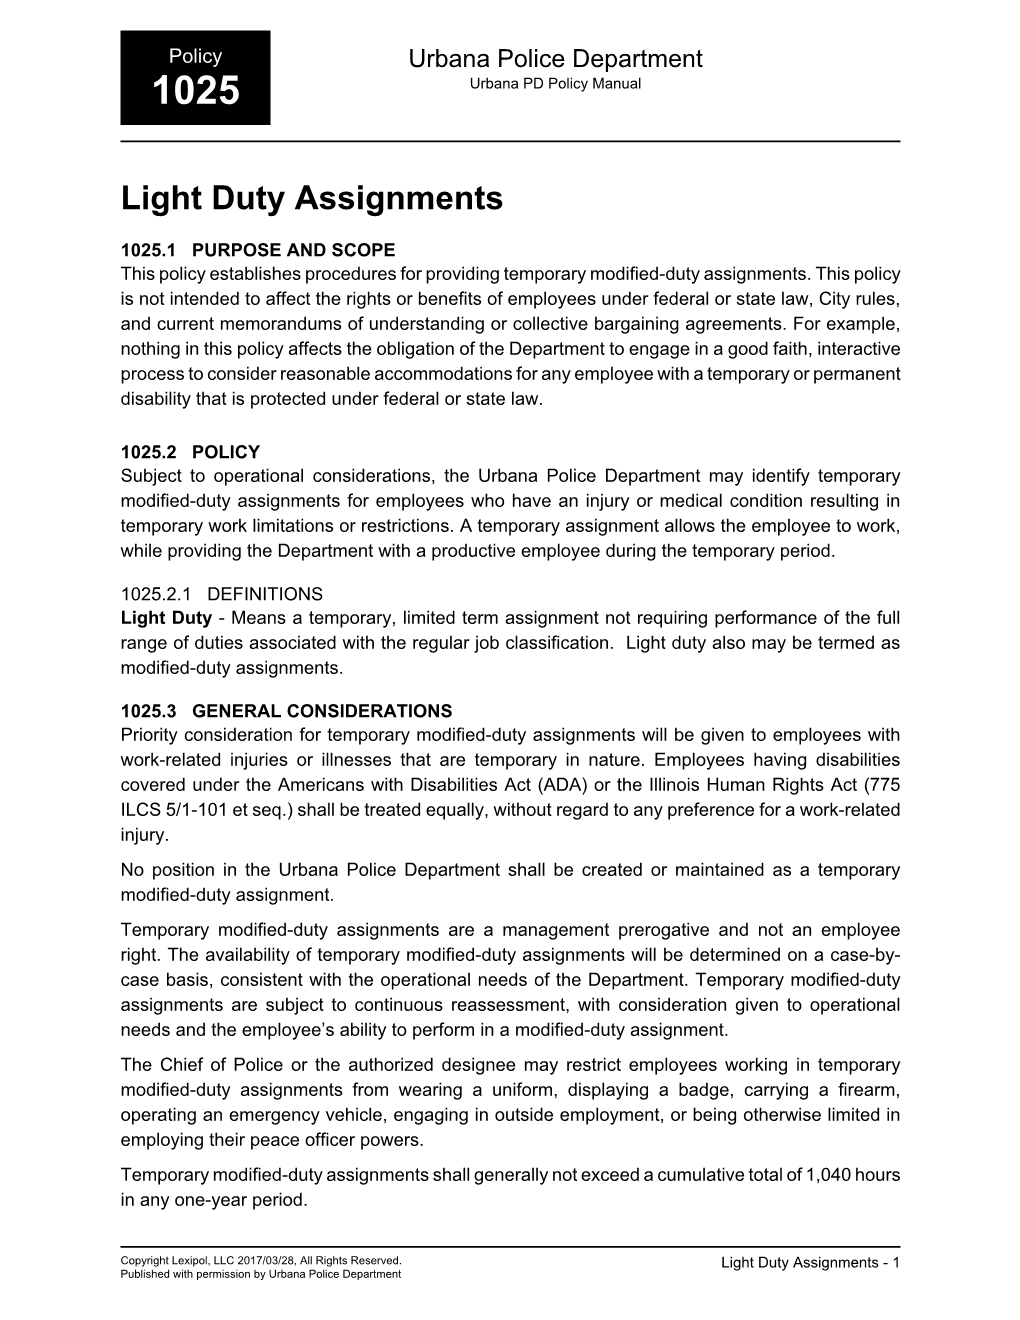 Light Duty Assignments